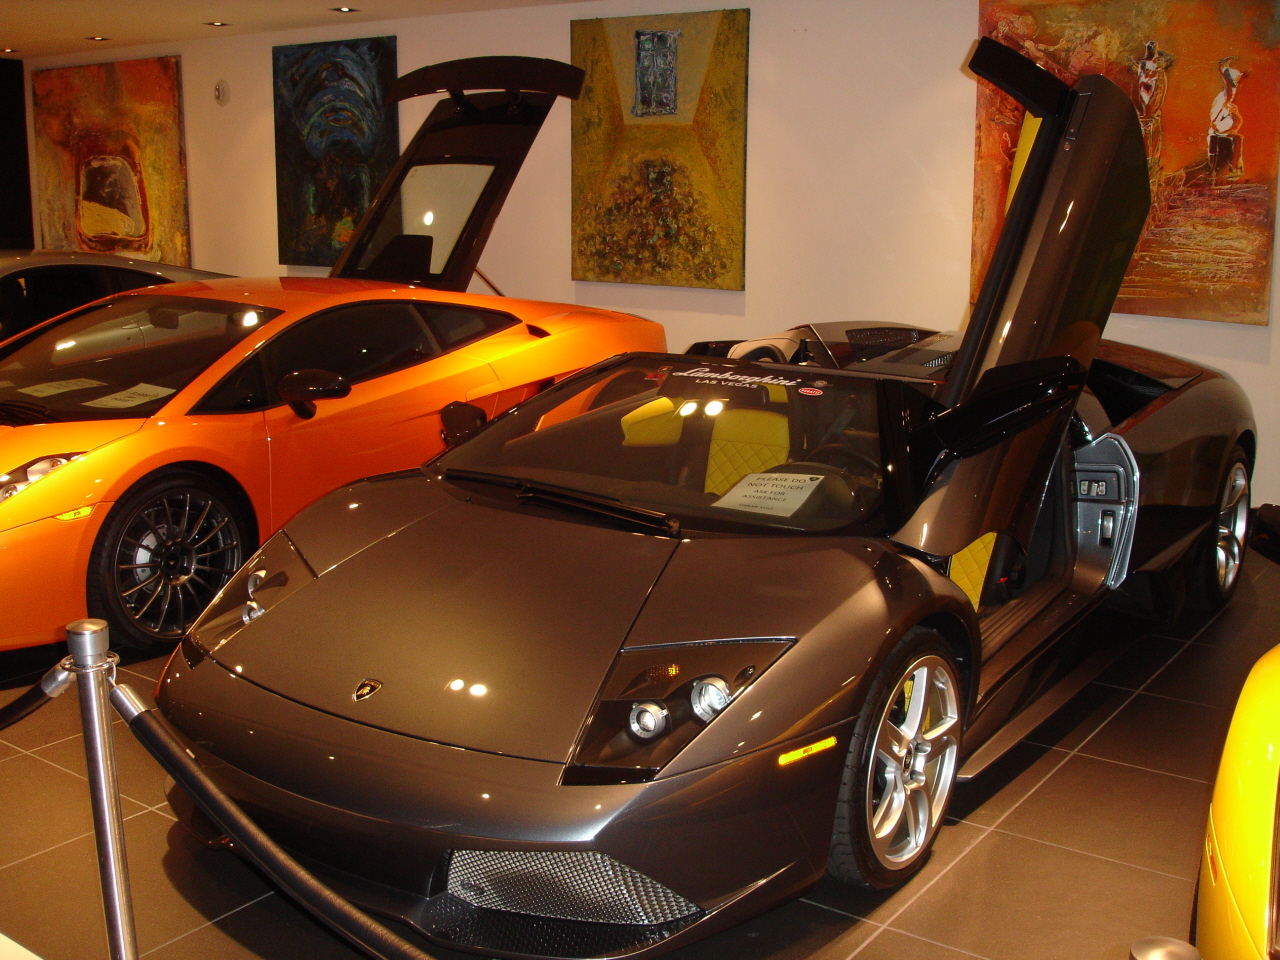 Visita al Museo Lamborghini Las Vegas/ Visit to Lamborghini Museum LasVegas-Lamborghini27.JPG